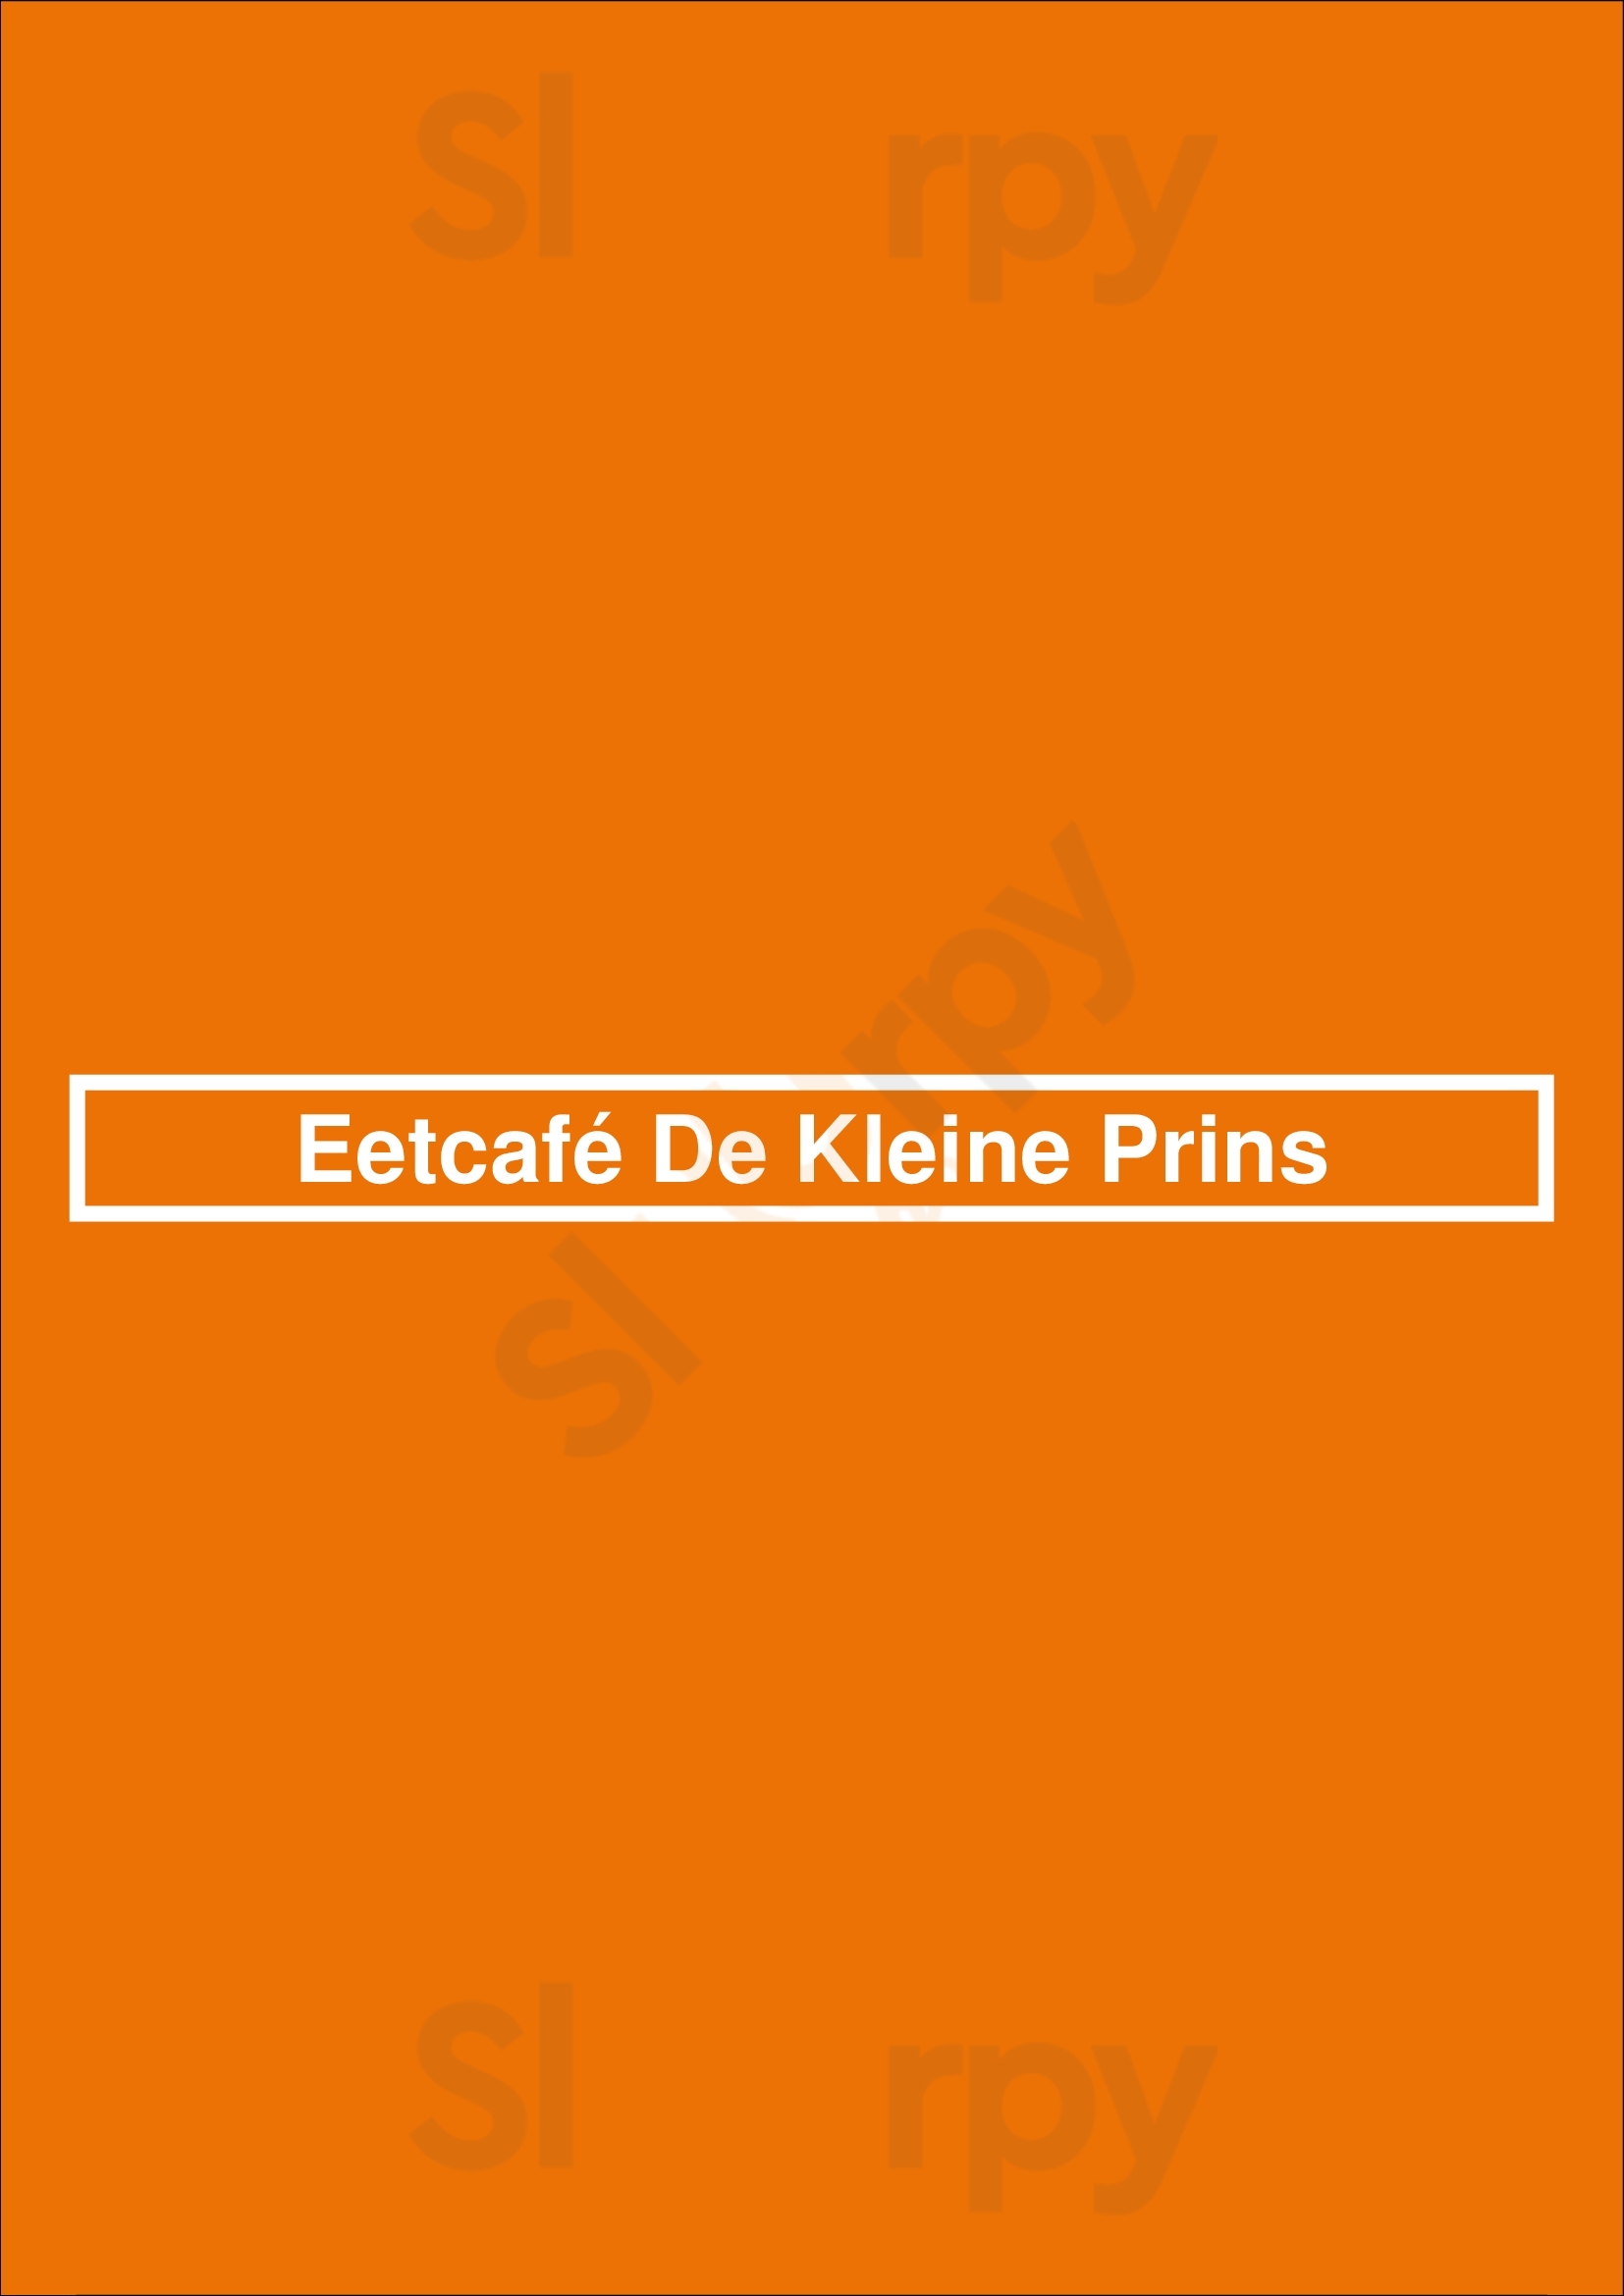 Eetcafé De Kleine Prins Den Haag Menu - 1